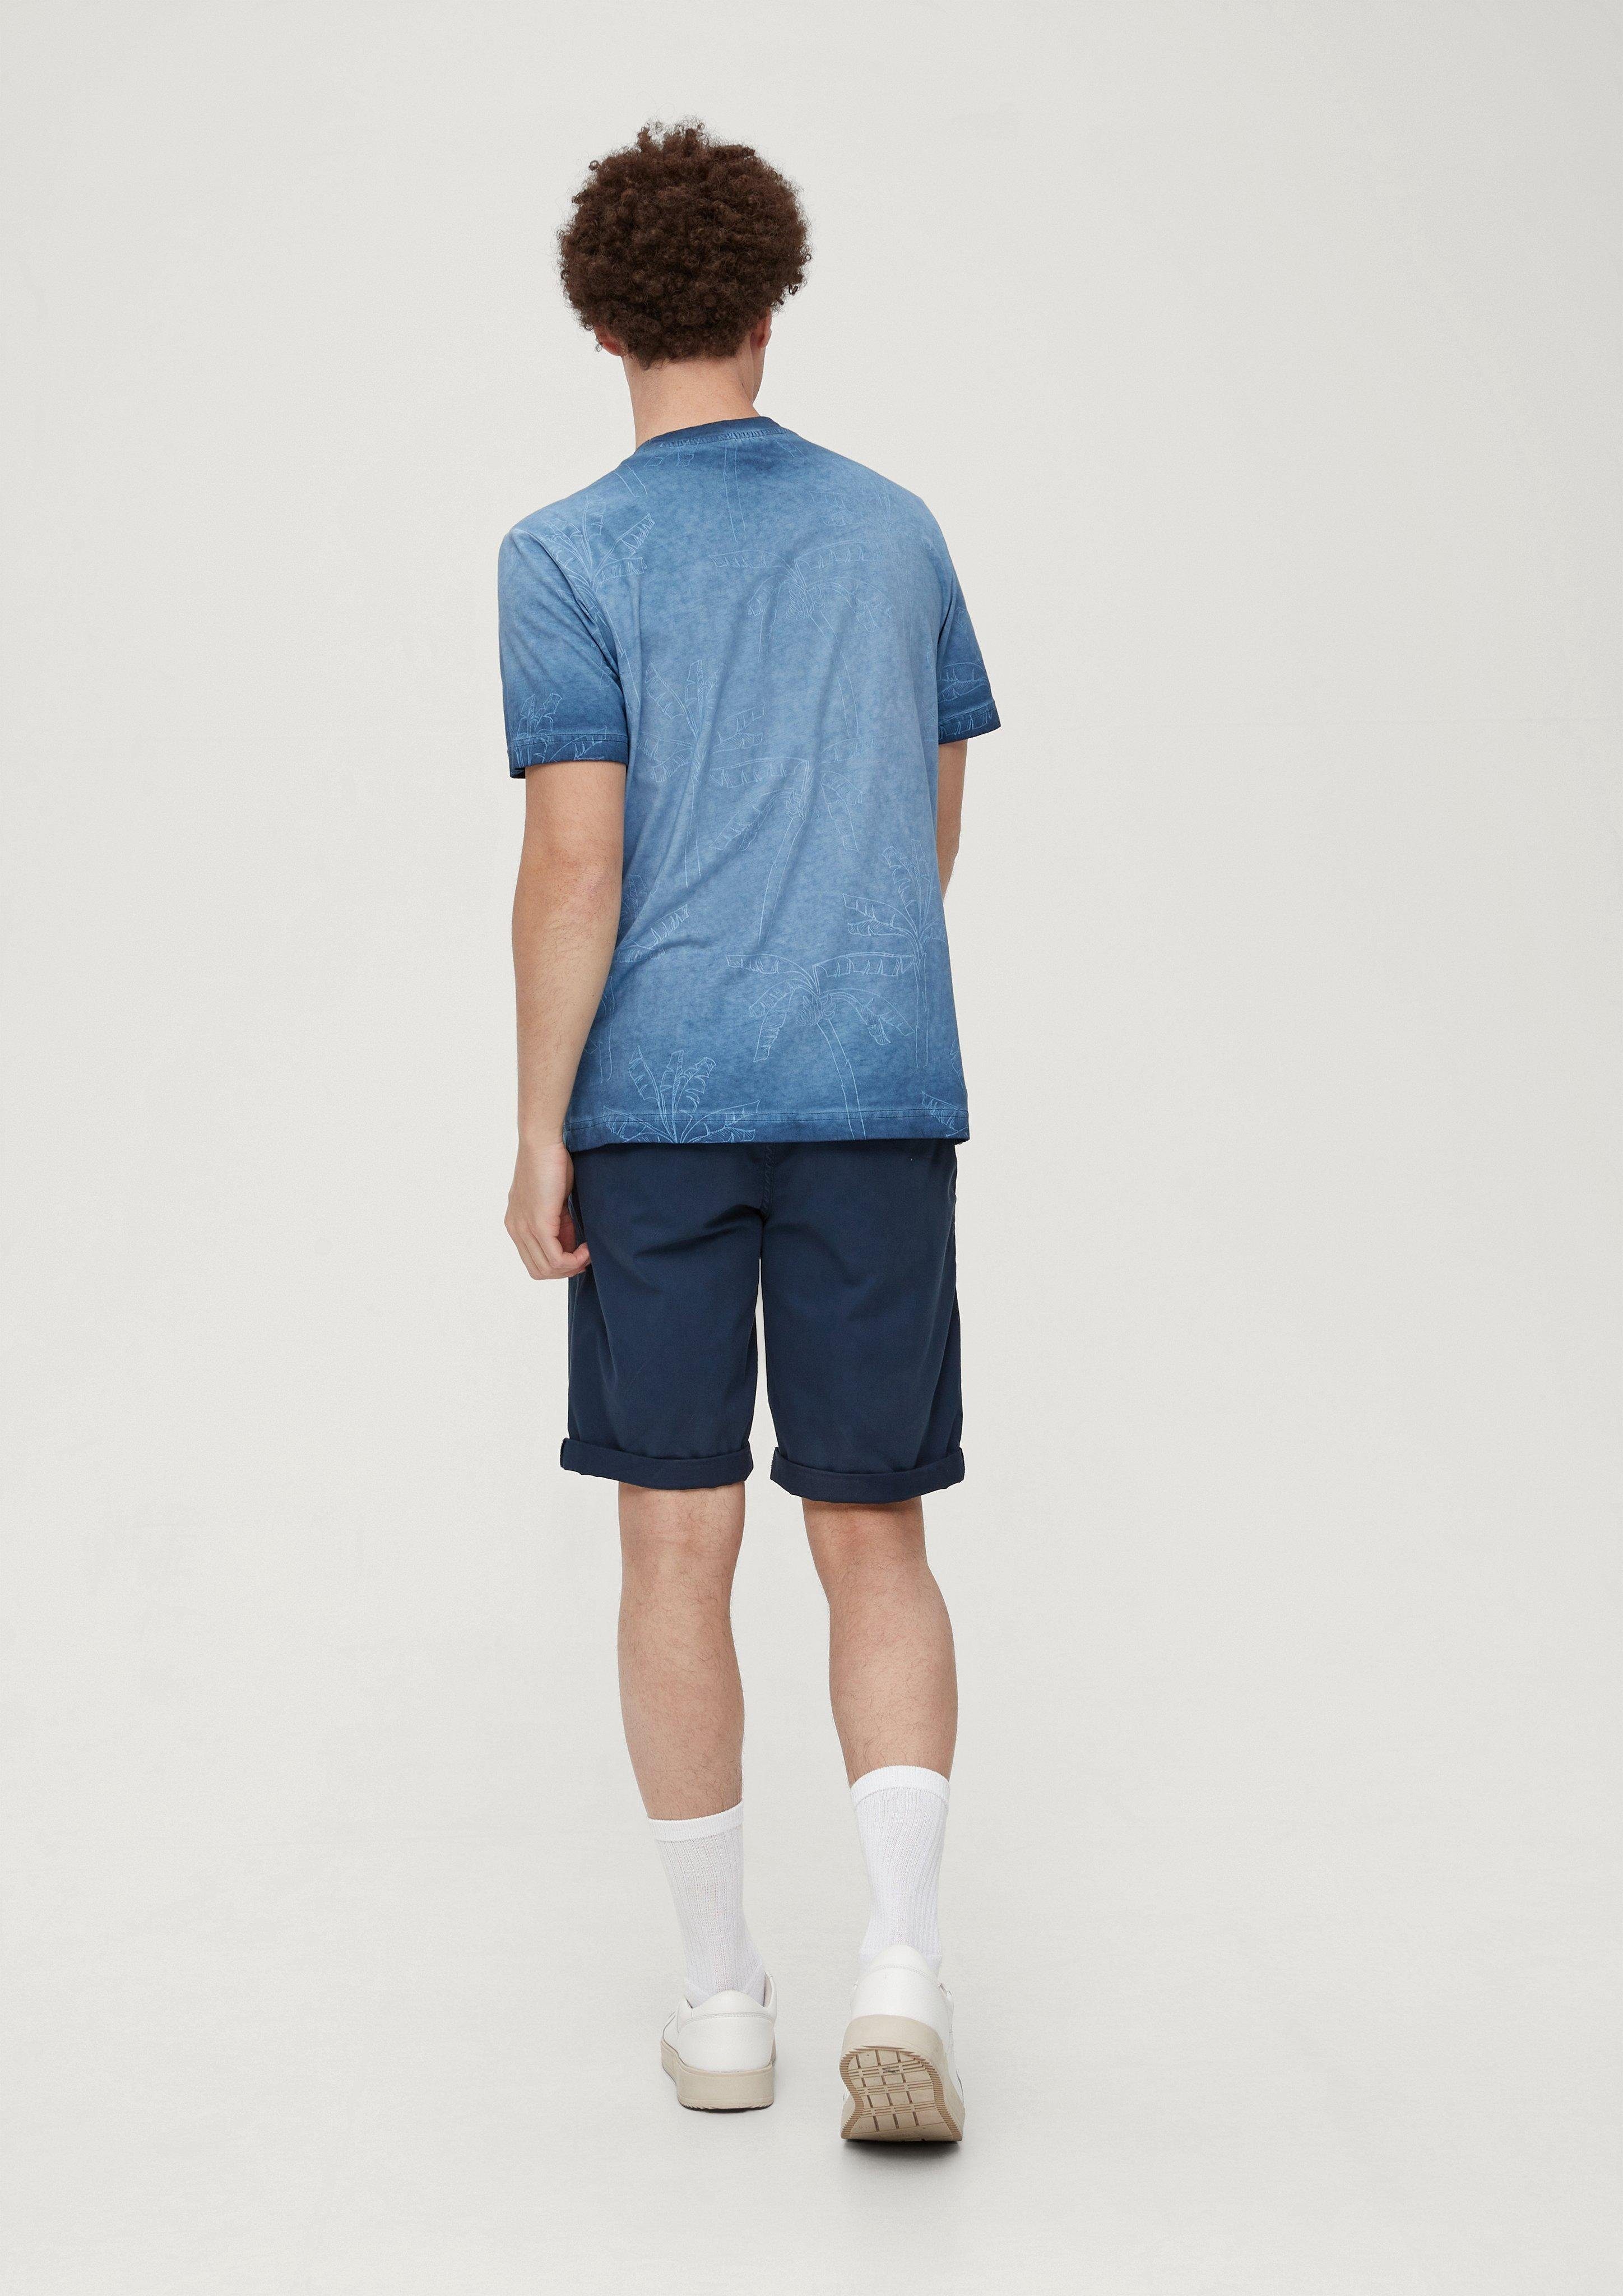 QS tiefblau Baumwolle T-Shirt reiner aus Kurzarmshirt